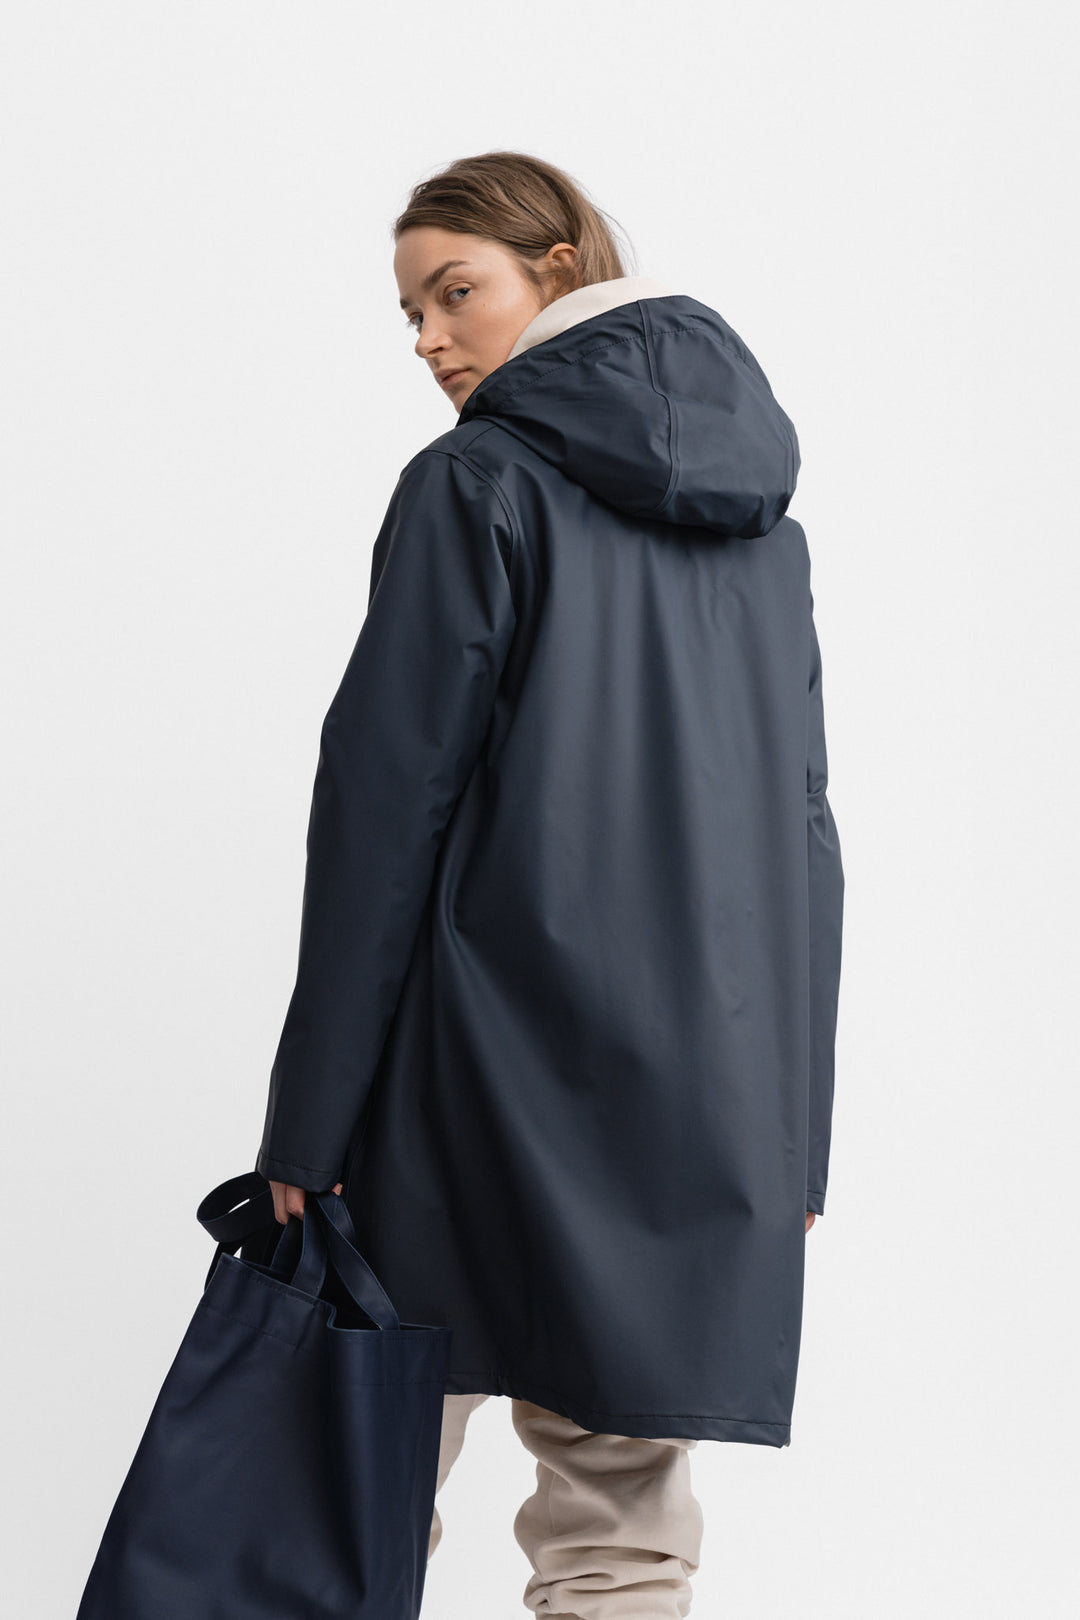 Mosebacke Lightweight Raincoat - Navy - Frontiers Woman